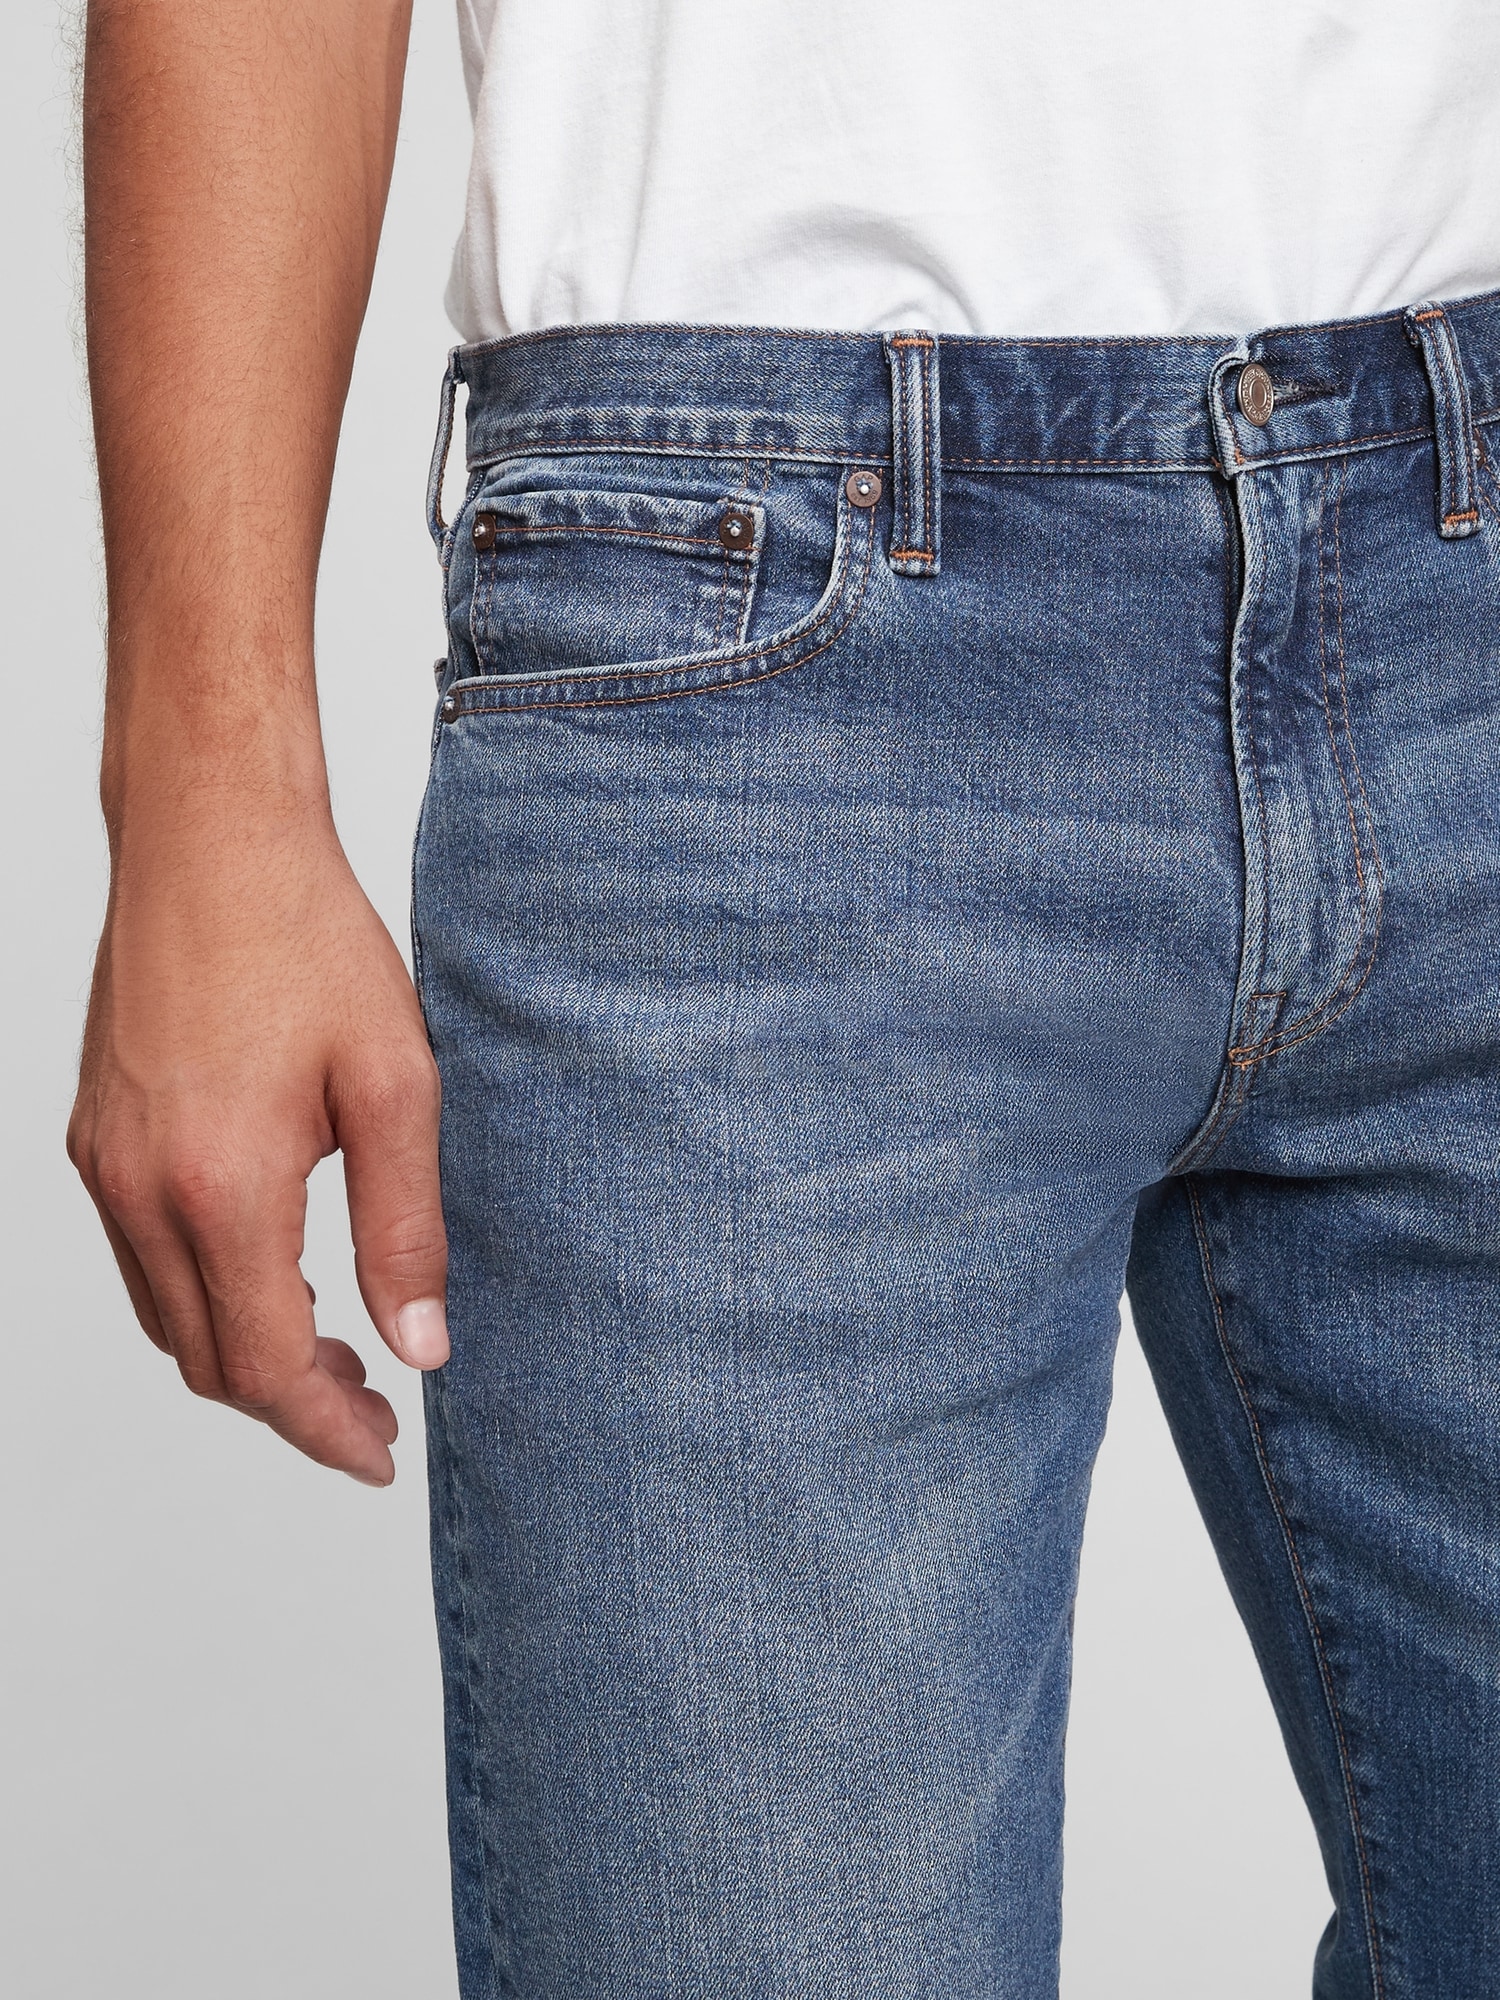 GAP Men's NEW Size 28/30 SOFT WEAR Straight Jeans with GapFlex LIGHT WASH